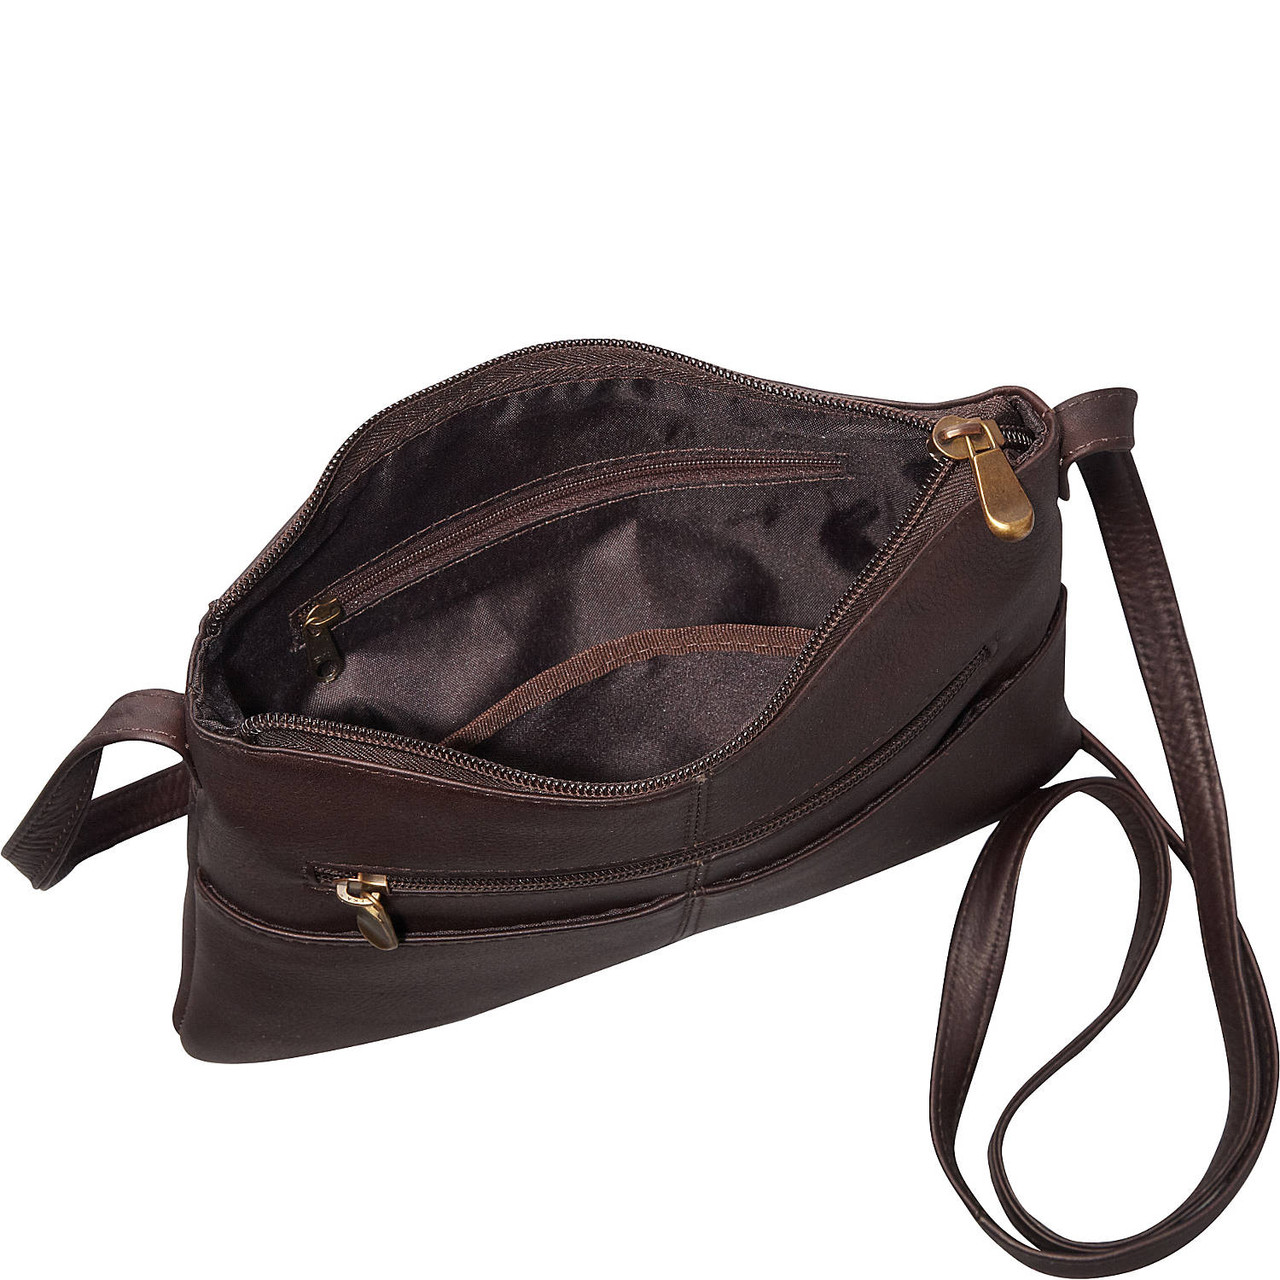 NIUEIMEE Zhou Small Shoulder Bag with 2 Removable Straps Cross Body Clutch Purse Handbag for Women